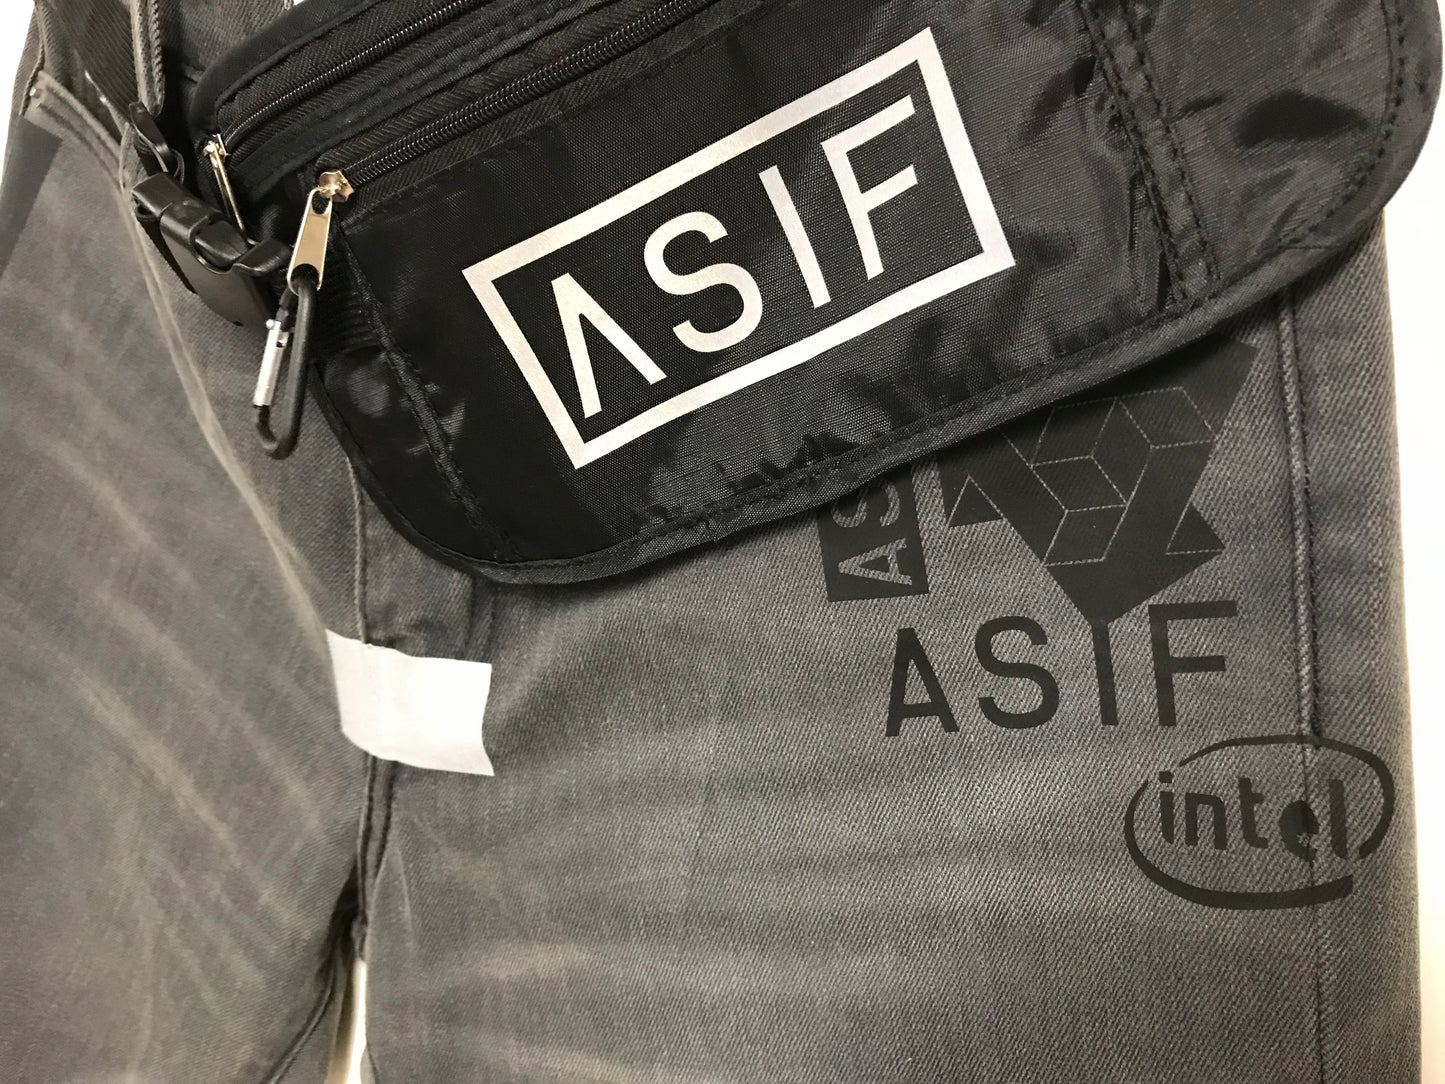 ASIF Black Denim Utility Jean - ASIF (as seen in the future)